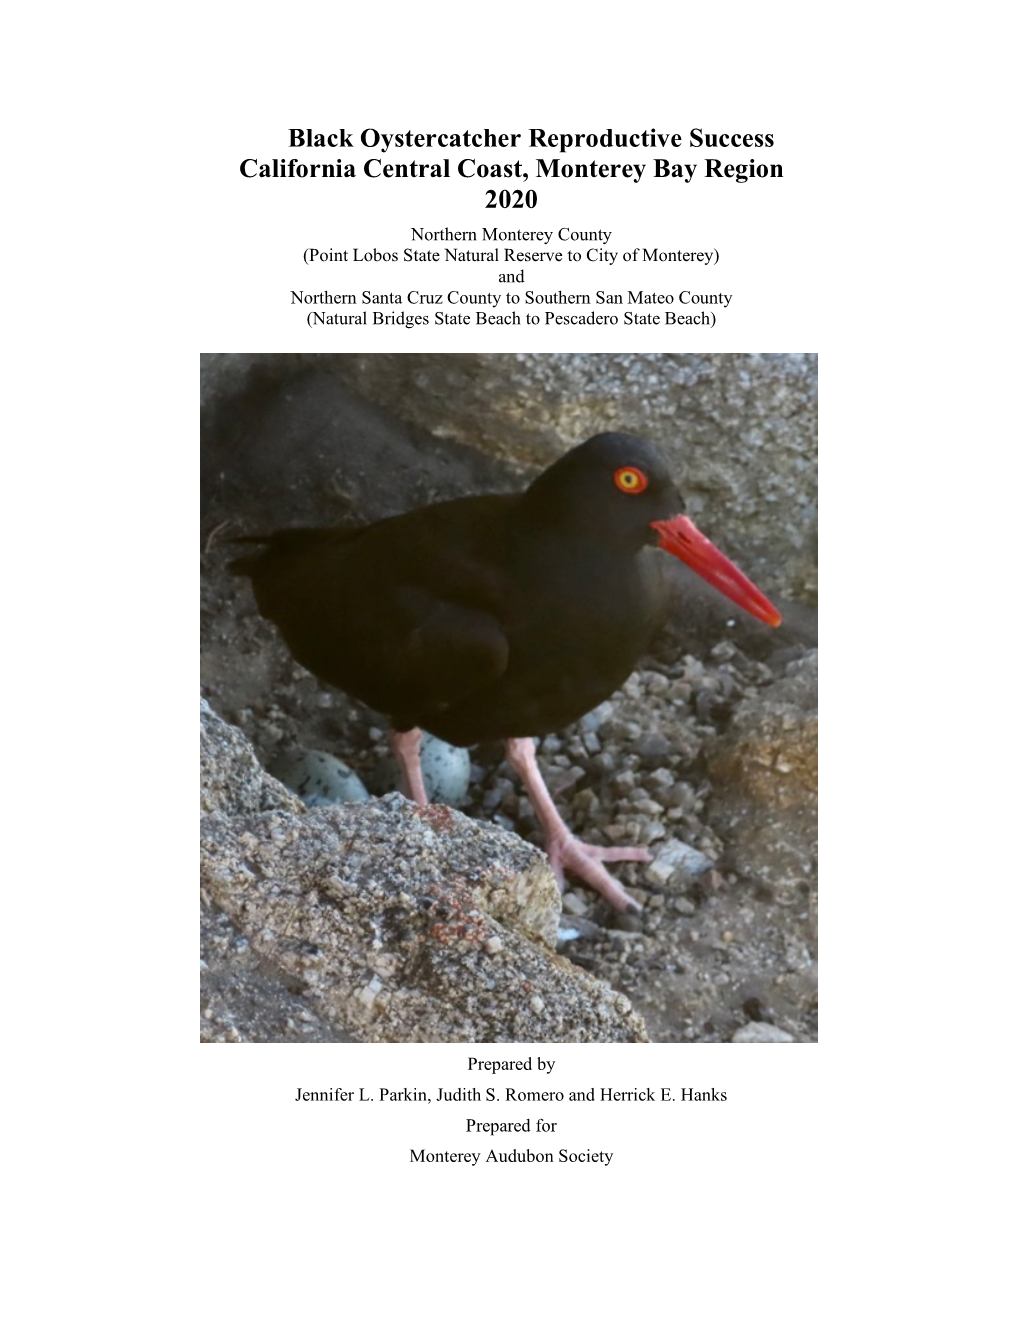 Black Oystercatcher Reproductive Success California Central Coast, Monterey Bay Region 2020